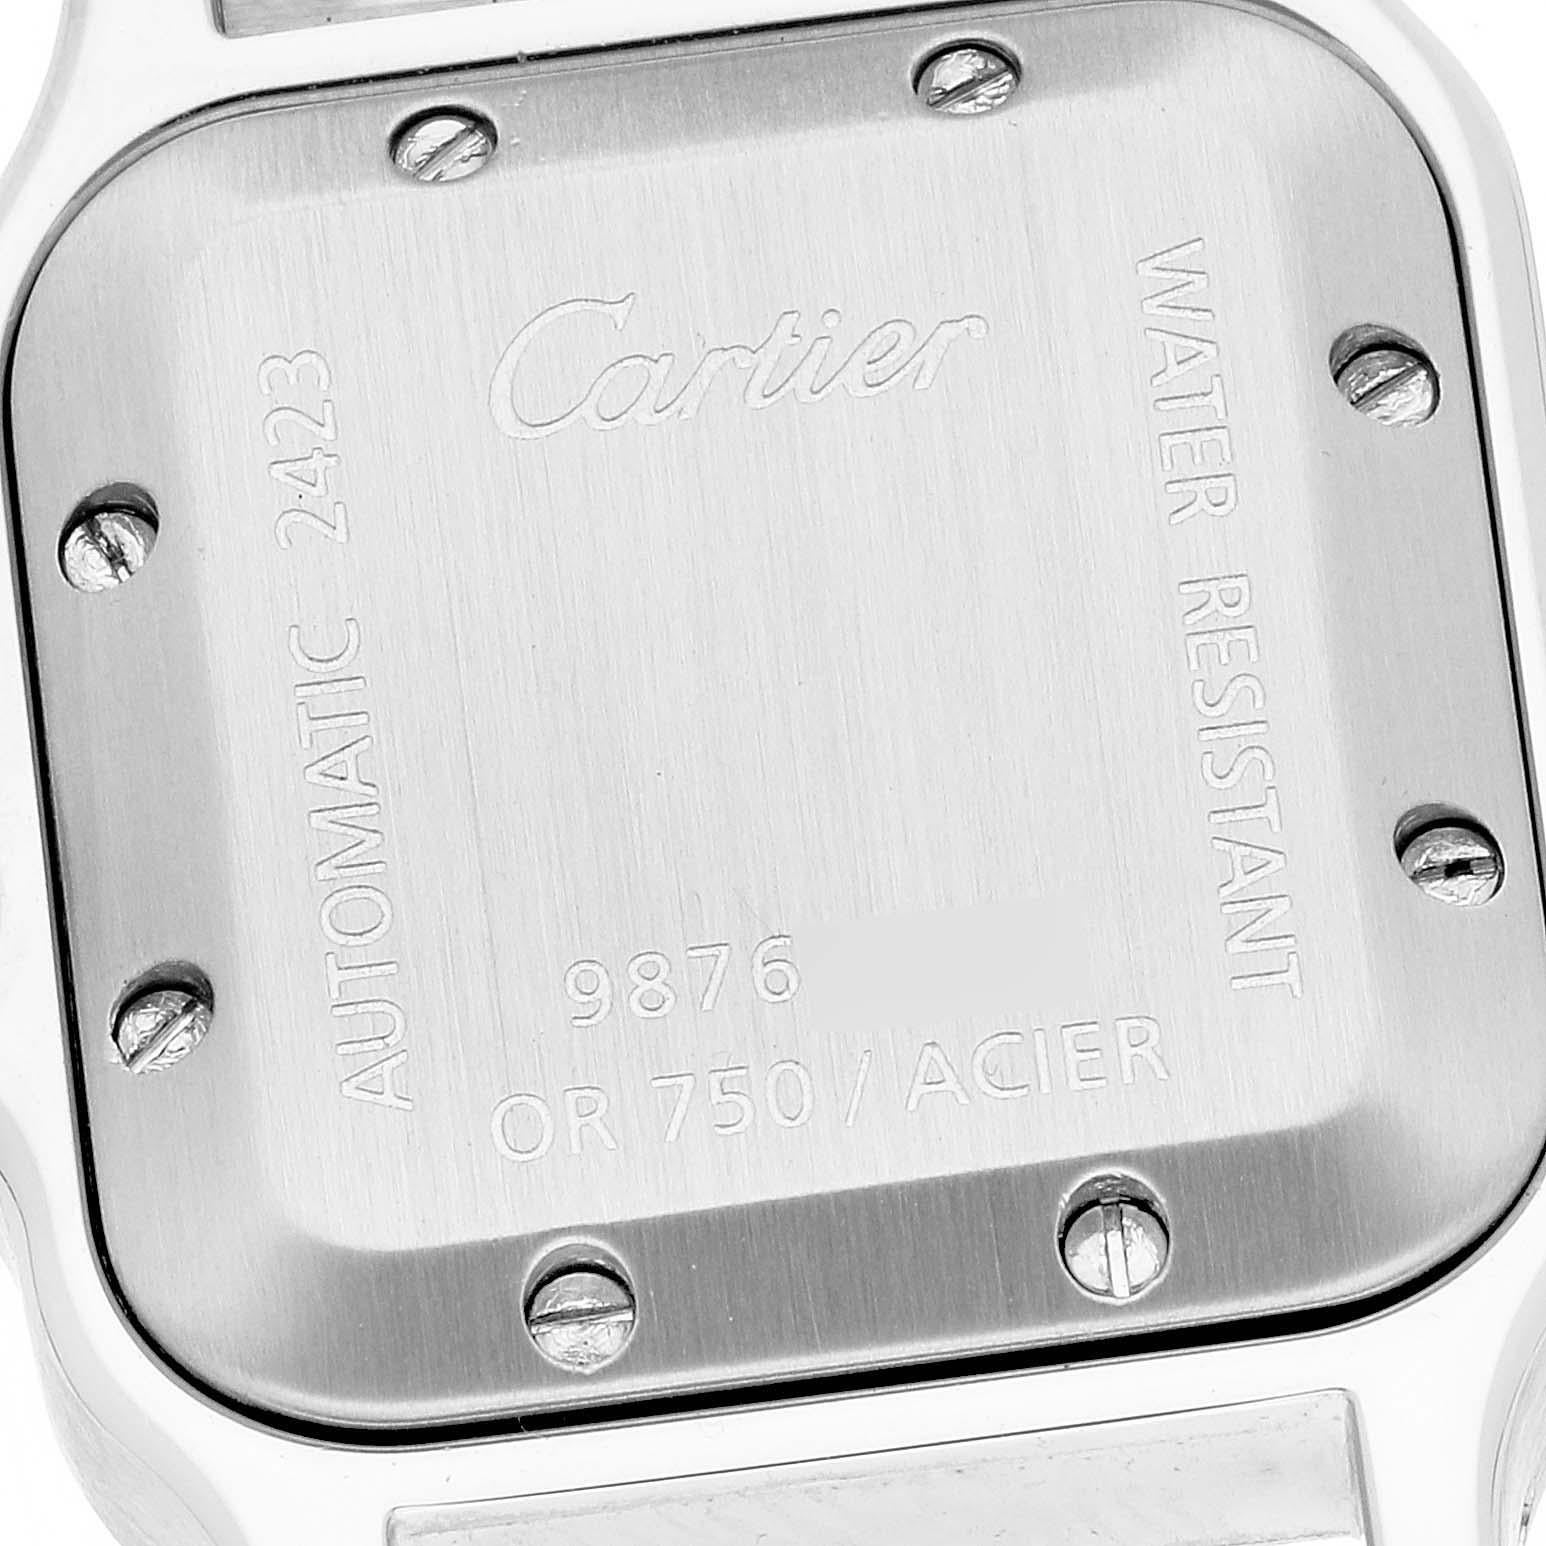 Cartier Santos Galbee Steel Yellow Gold Ladies Watch W20057C4 1